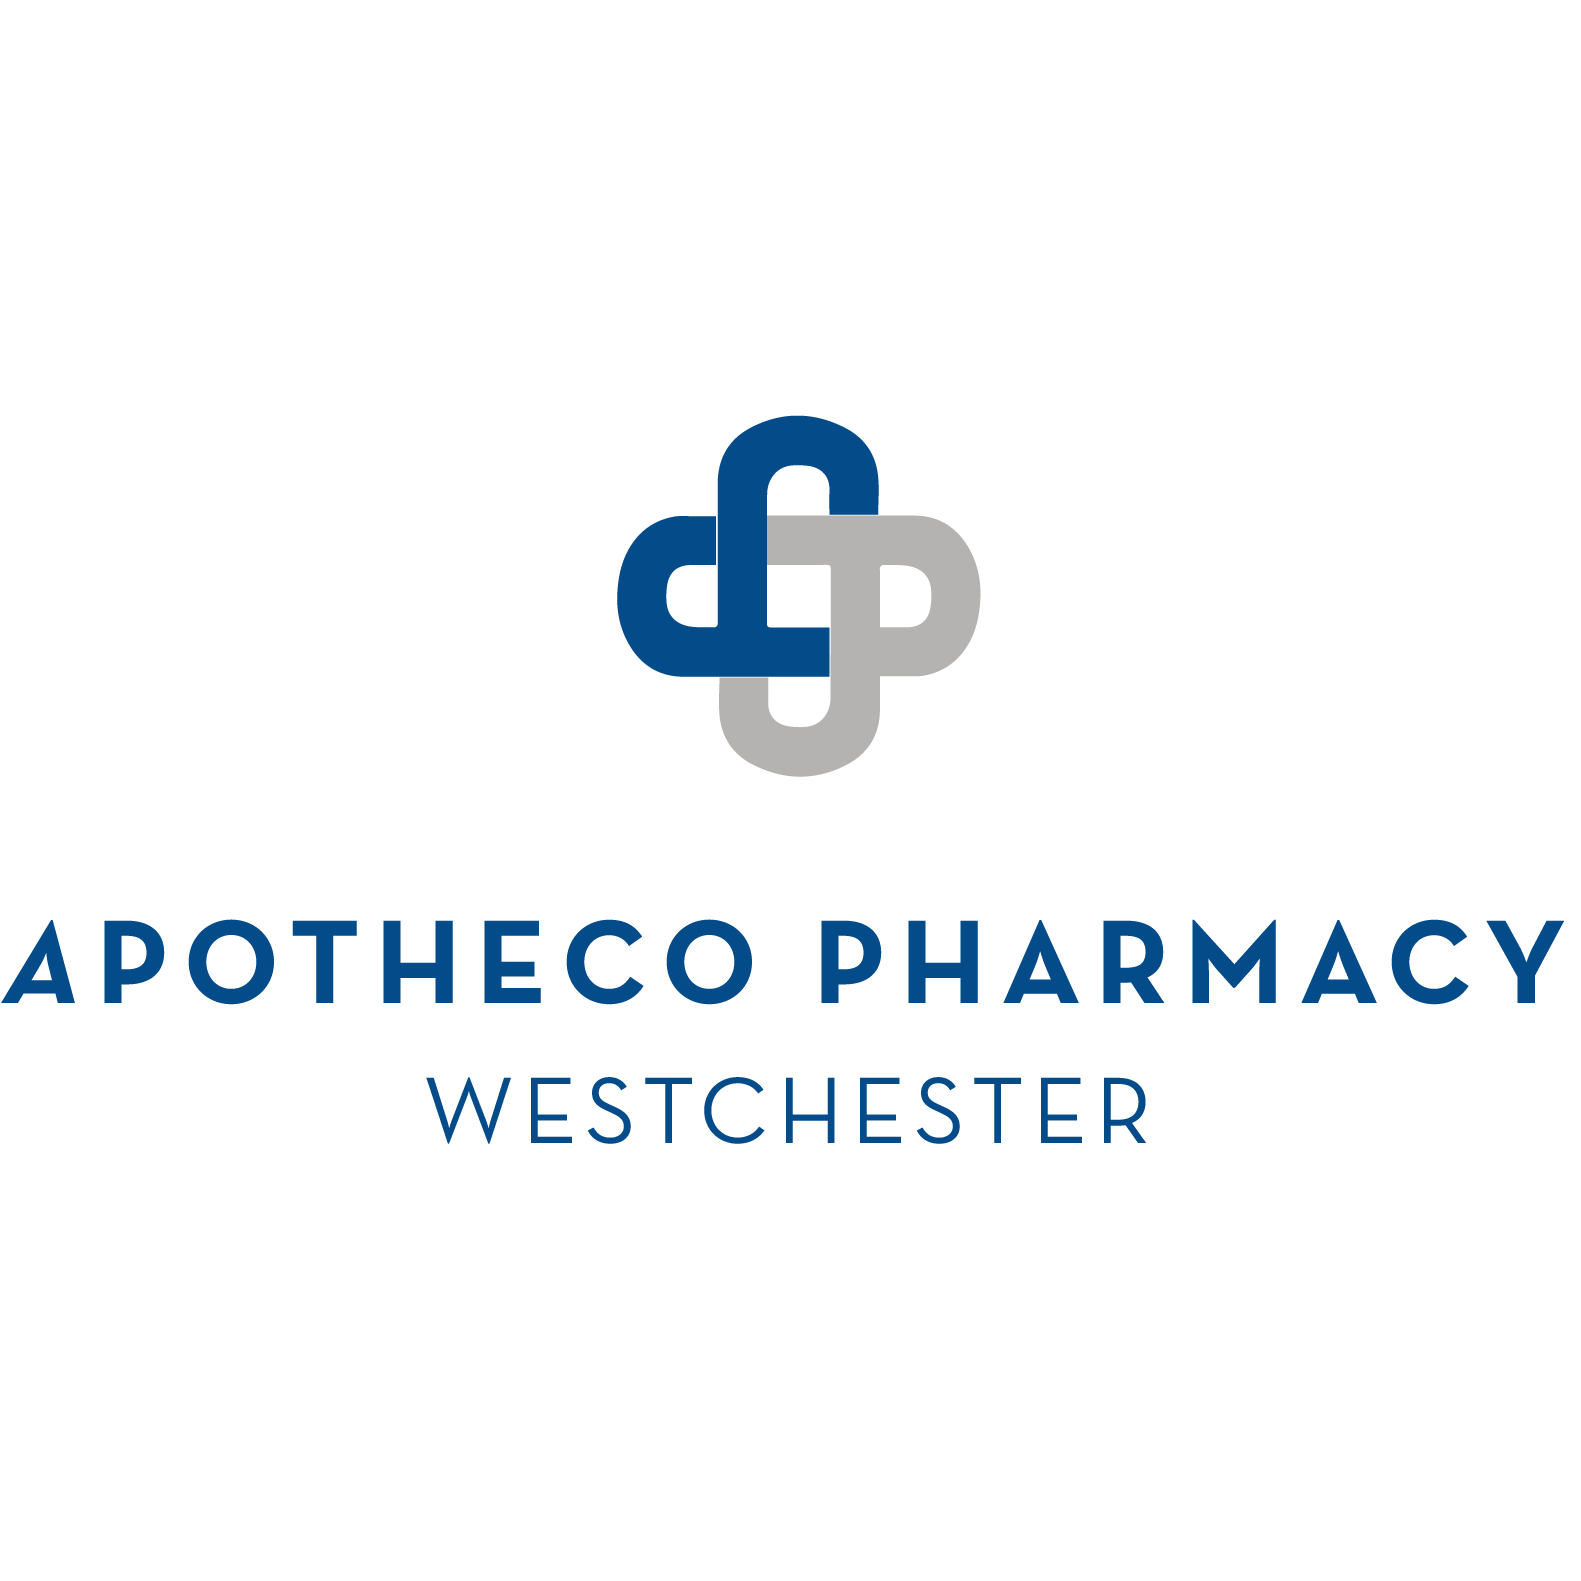 Apotheco Pharmacy Westchester - Dermatology Pharmacy Logo